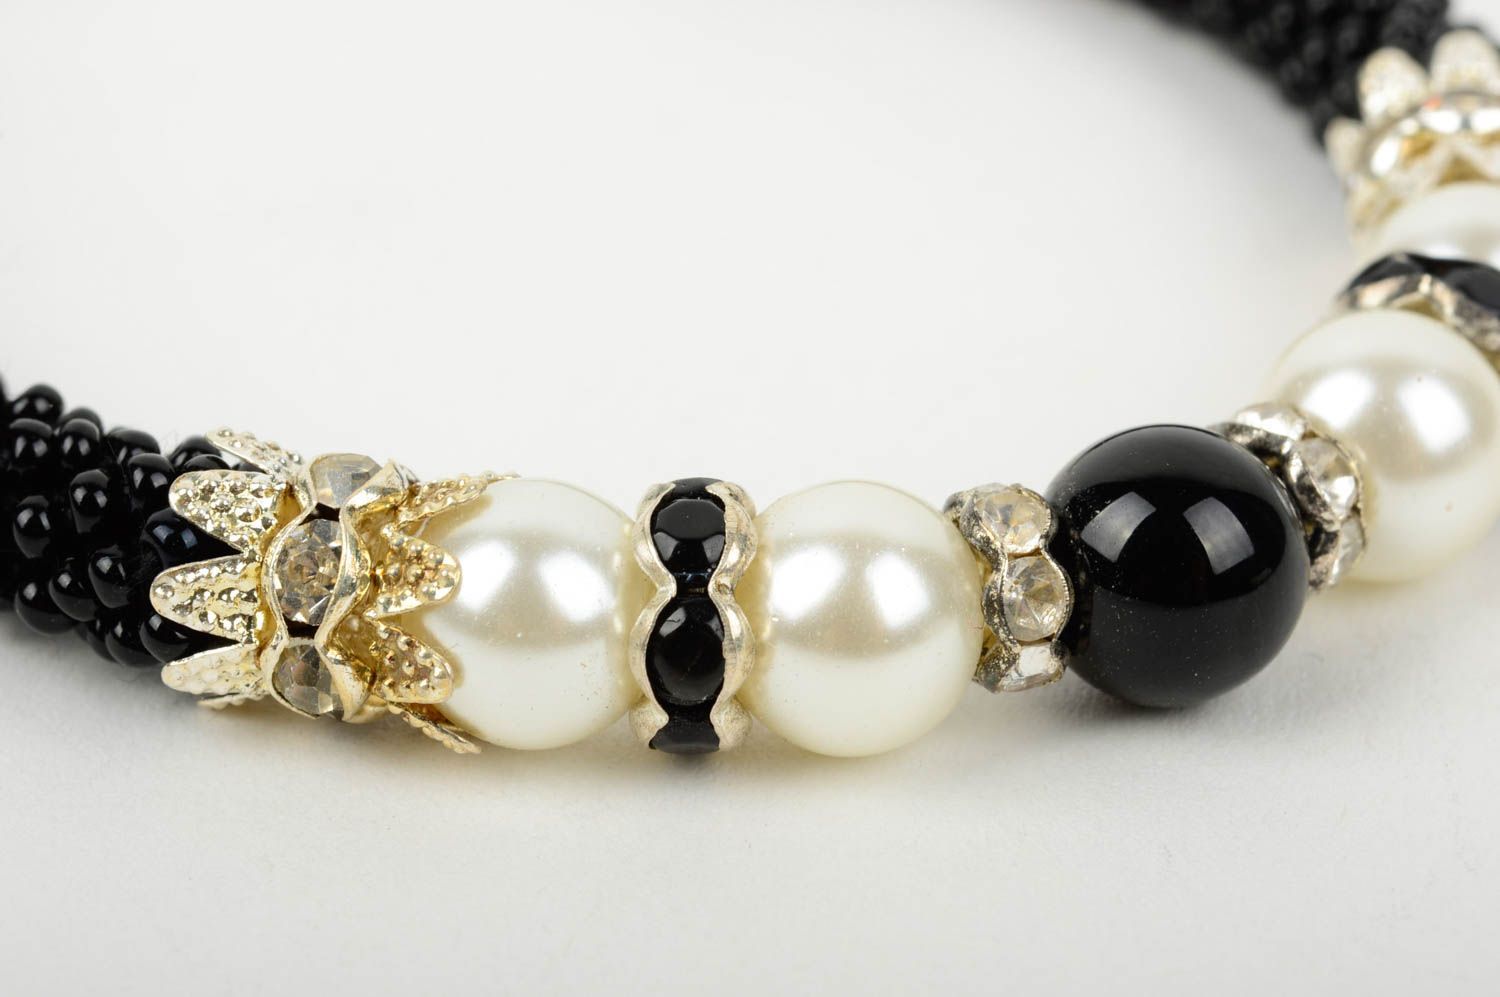 Handmade fashionable bracelet unusual accessories designer lovely jewelry photo 3